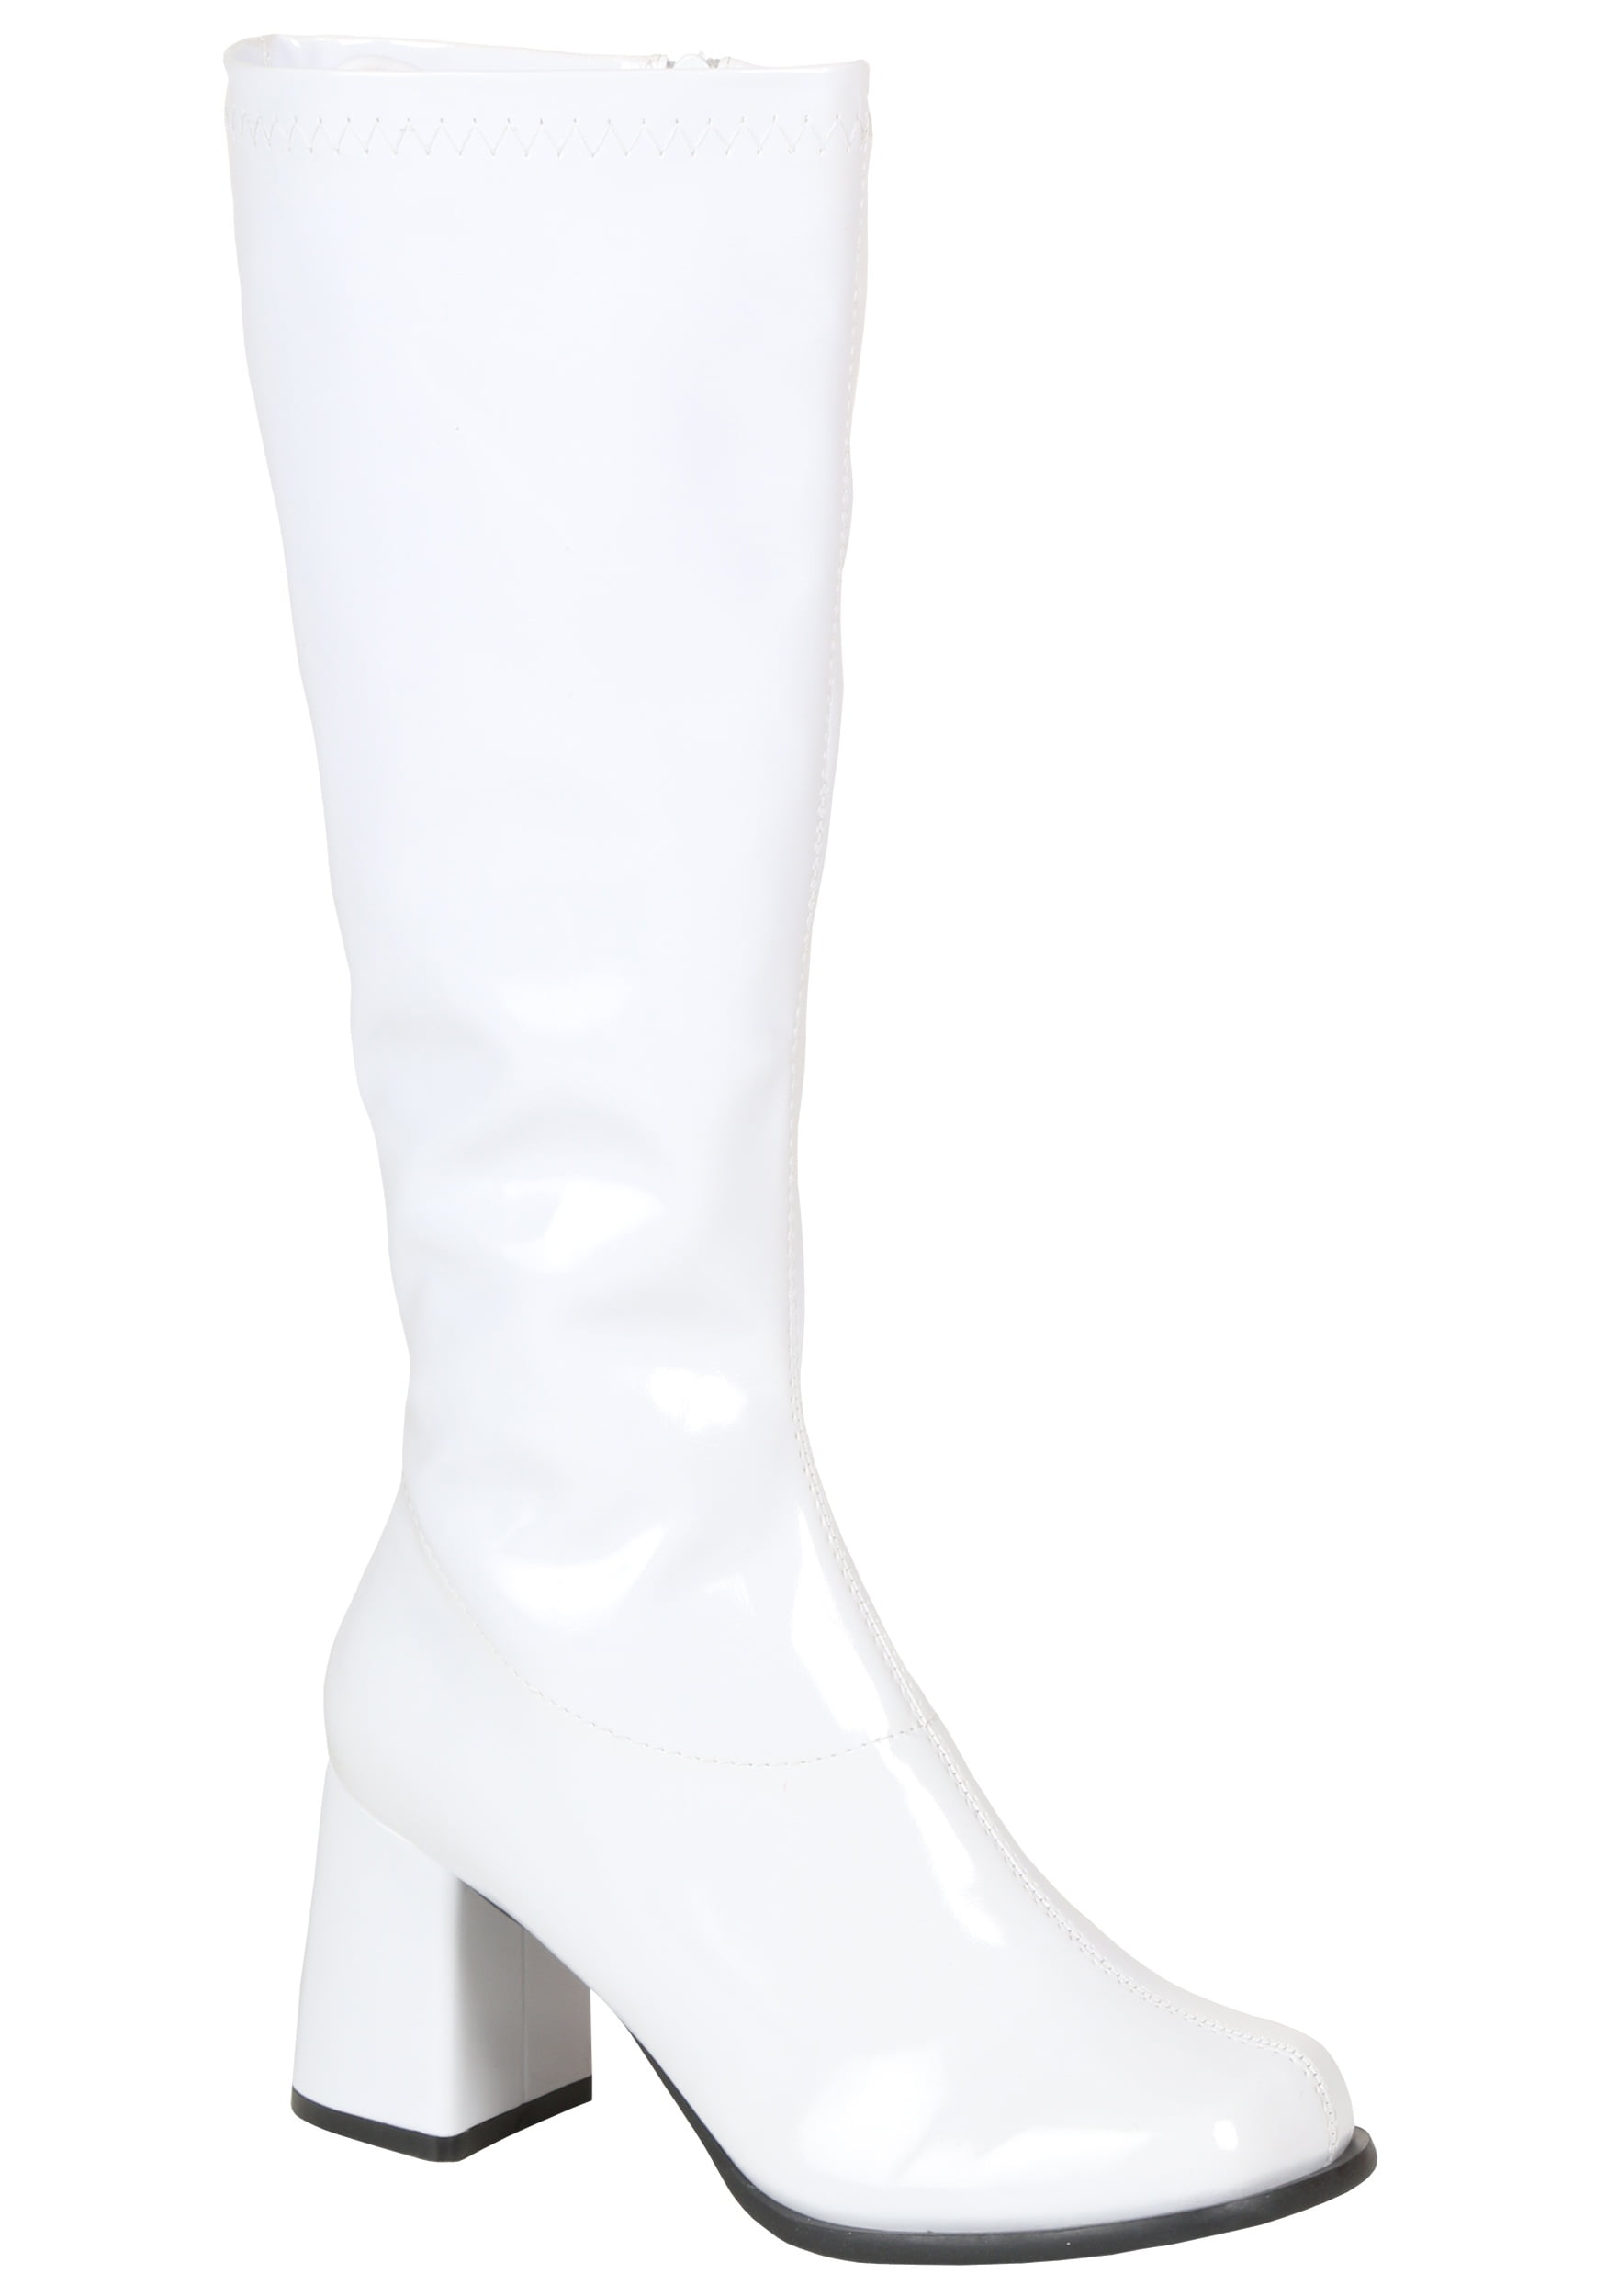 FUN Costumes - Womens White Gogo Boots 